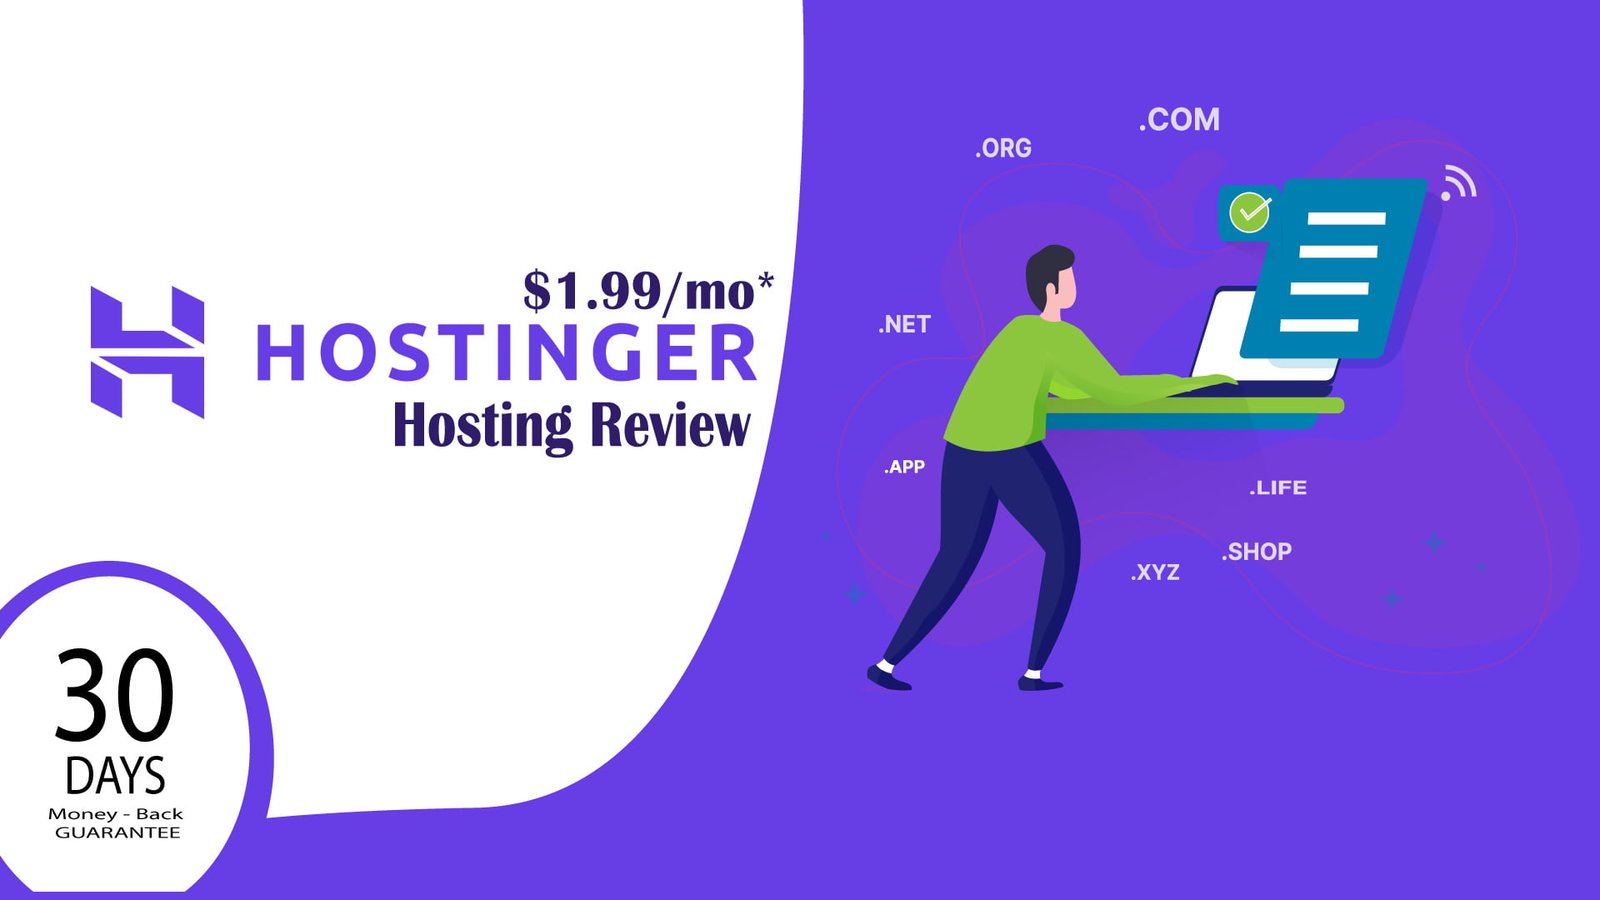 Hostinger web hosting review 2022